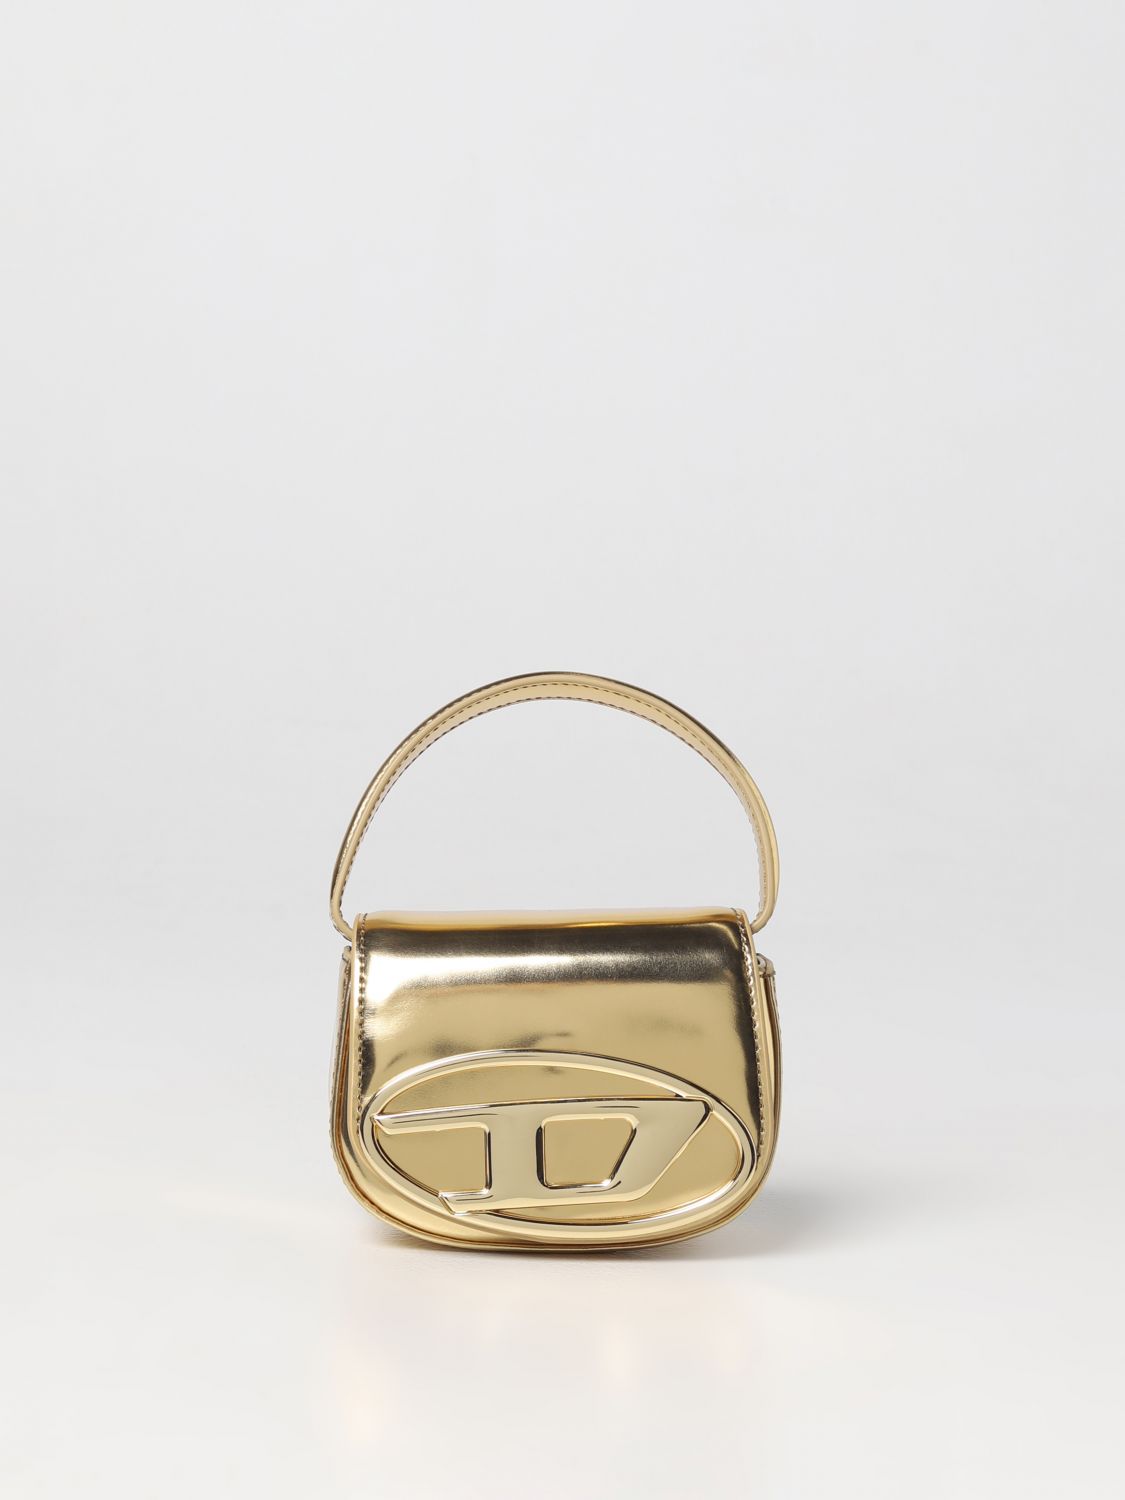 DIESEL: bag in mirrored leather - Gold | Diesel mini bag X08957PS202 ...